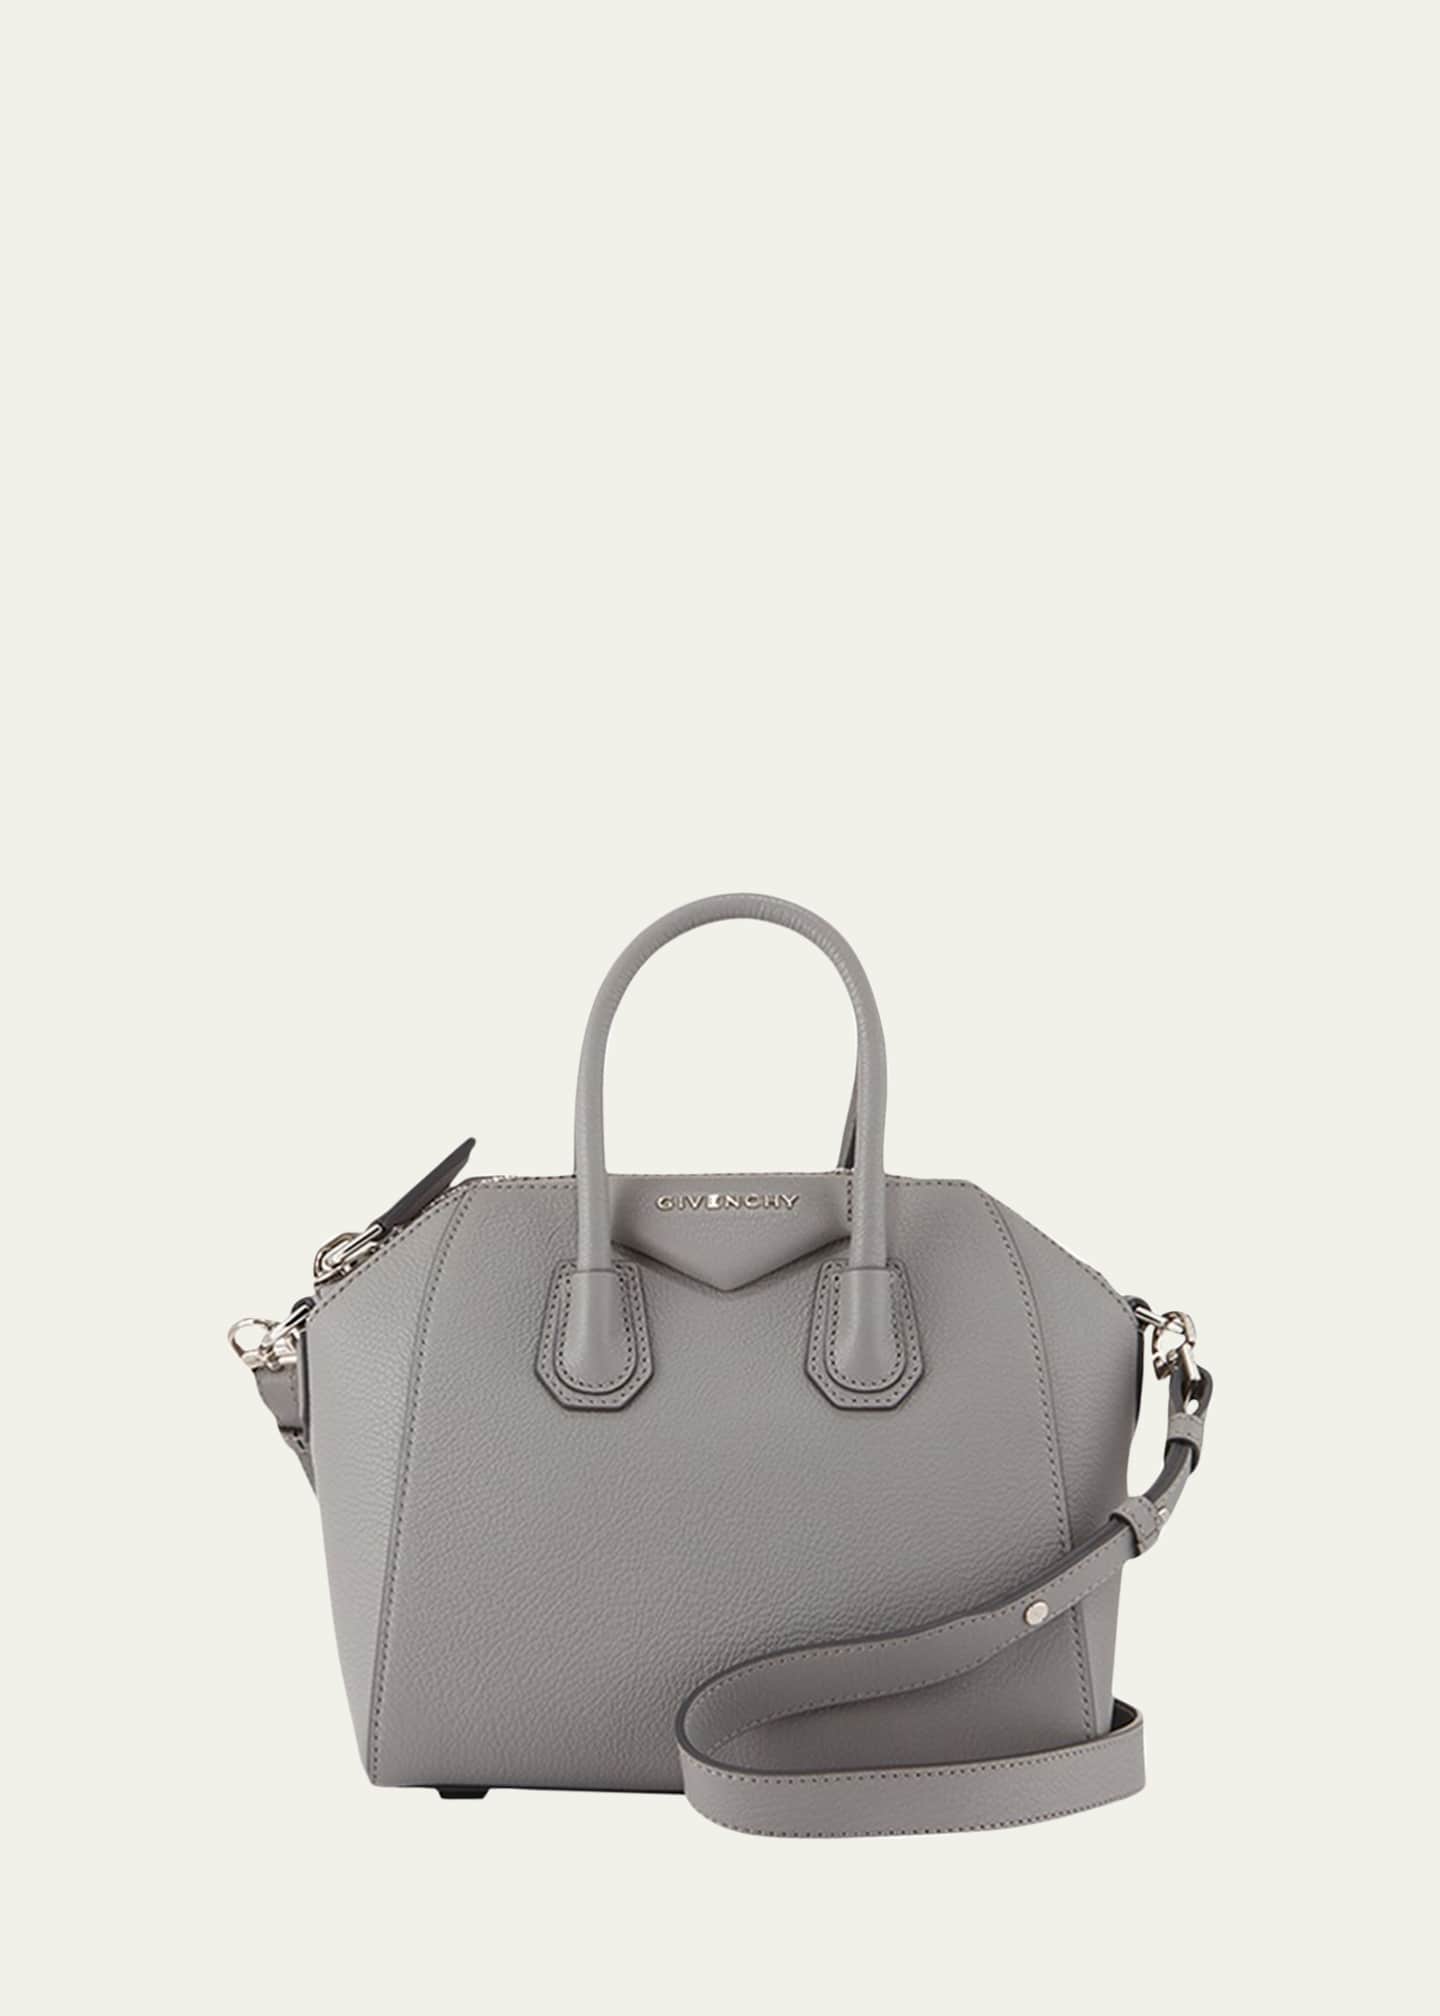 Givenchy Antigona Mini Grained Leather Bag